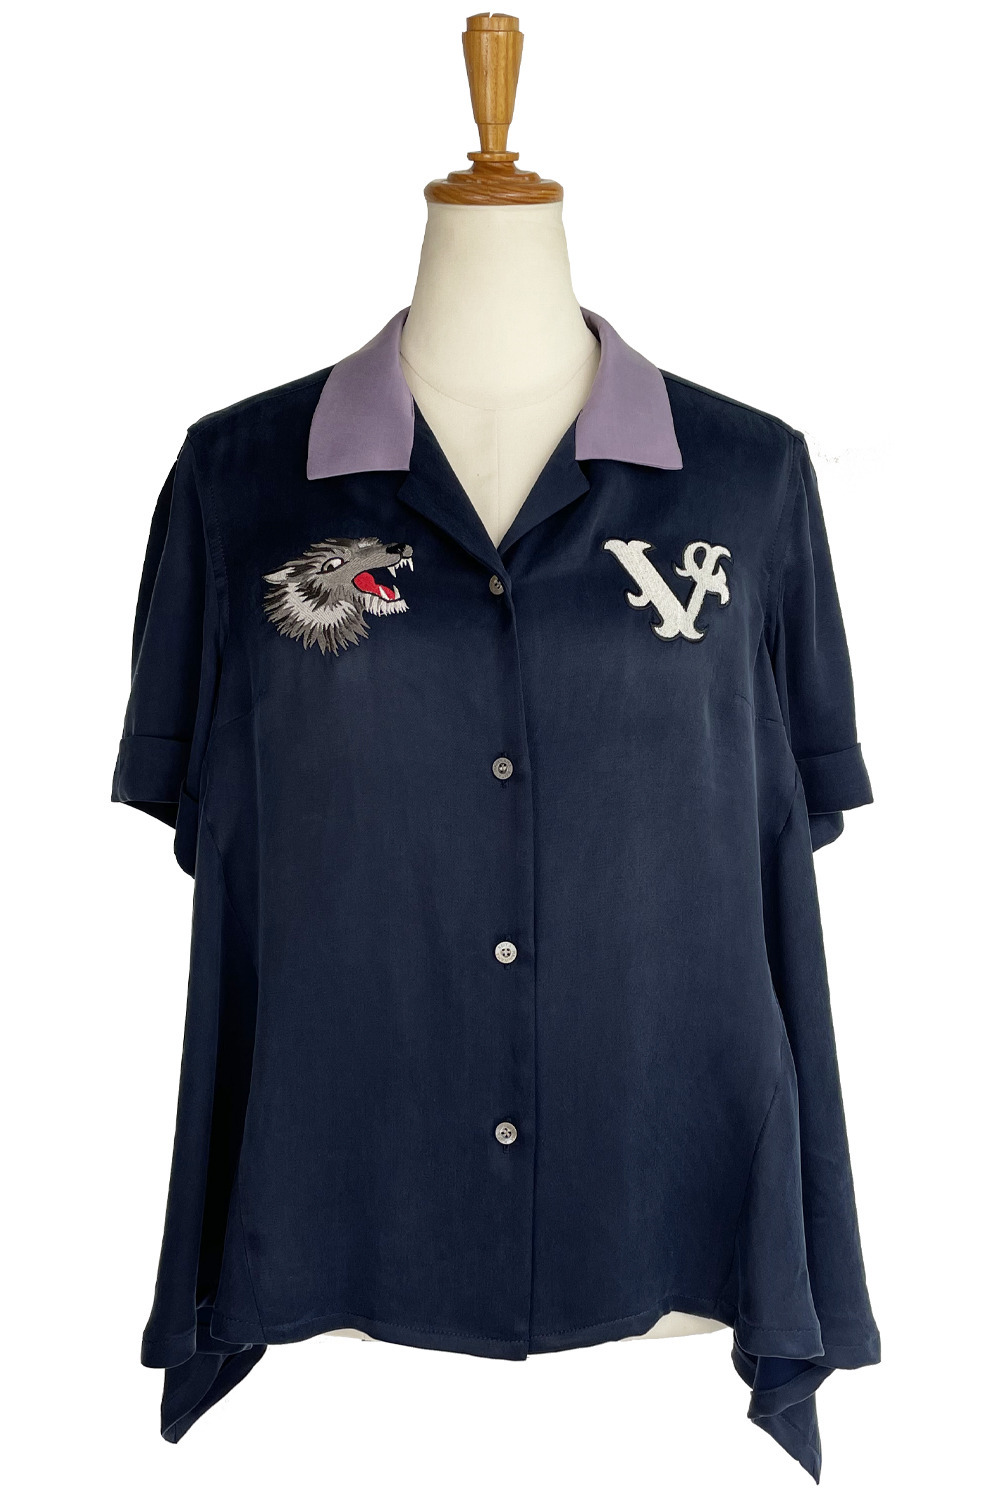 KEITAMARUYAMA × 千代の富士 Embroidery Shirt					 詳細画像 ネイビー